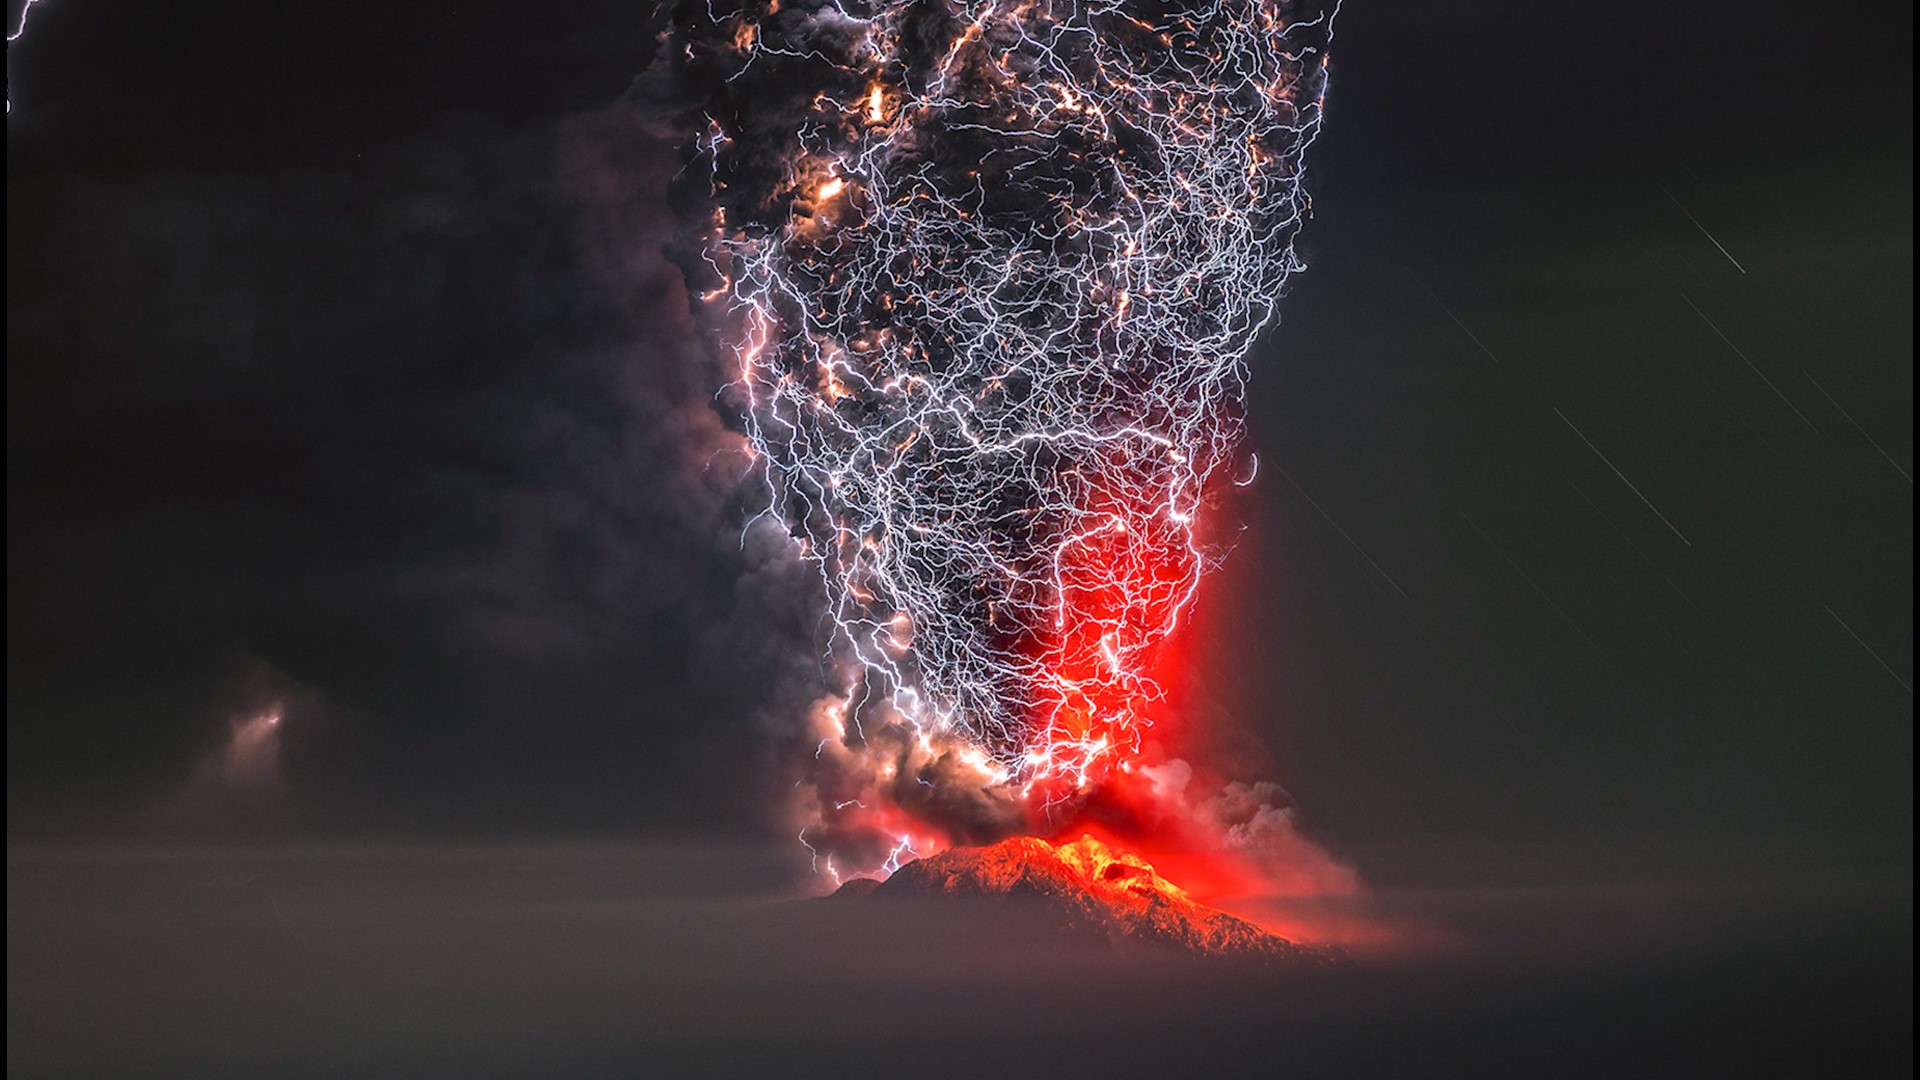 Photo Prize Winning Volcano Lightning Storm Image Is Stunning